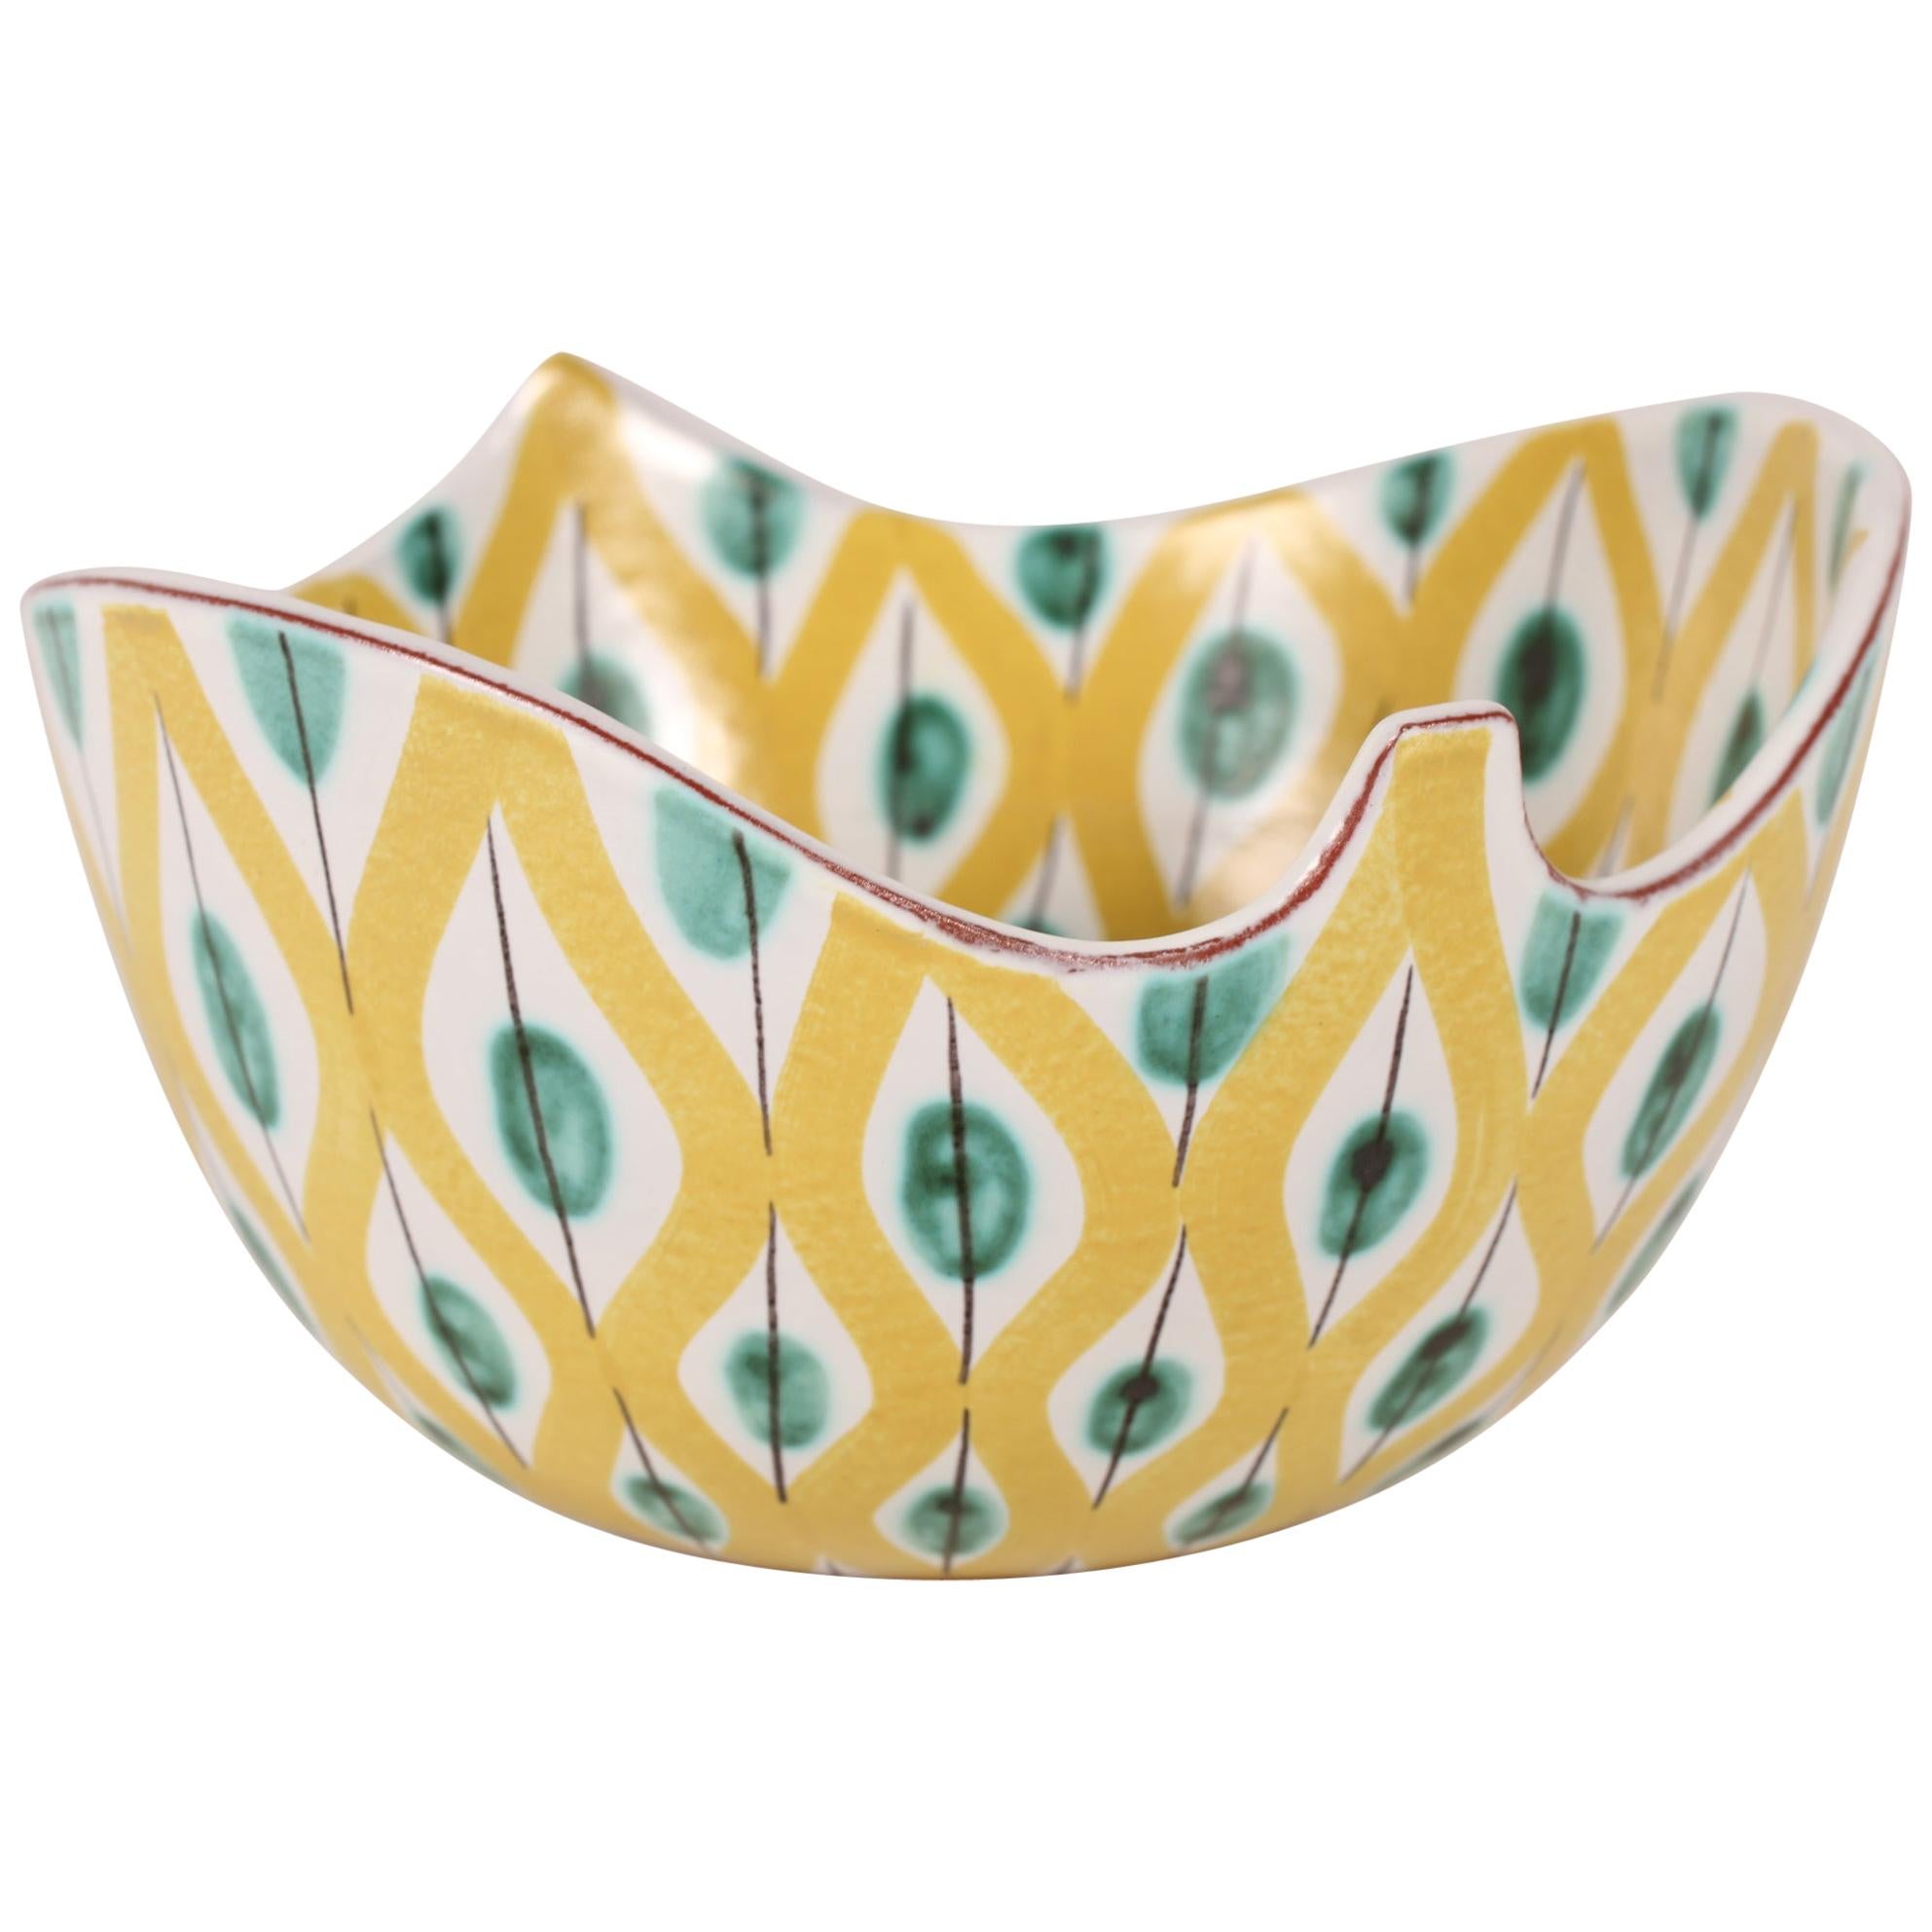 Stig Lindberg for Gustavsberg Leaf Shaped Ceramic Bowl with Colorful Decor 1950s